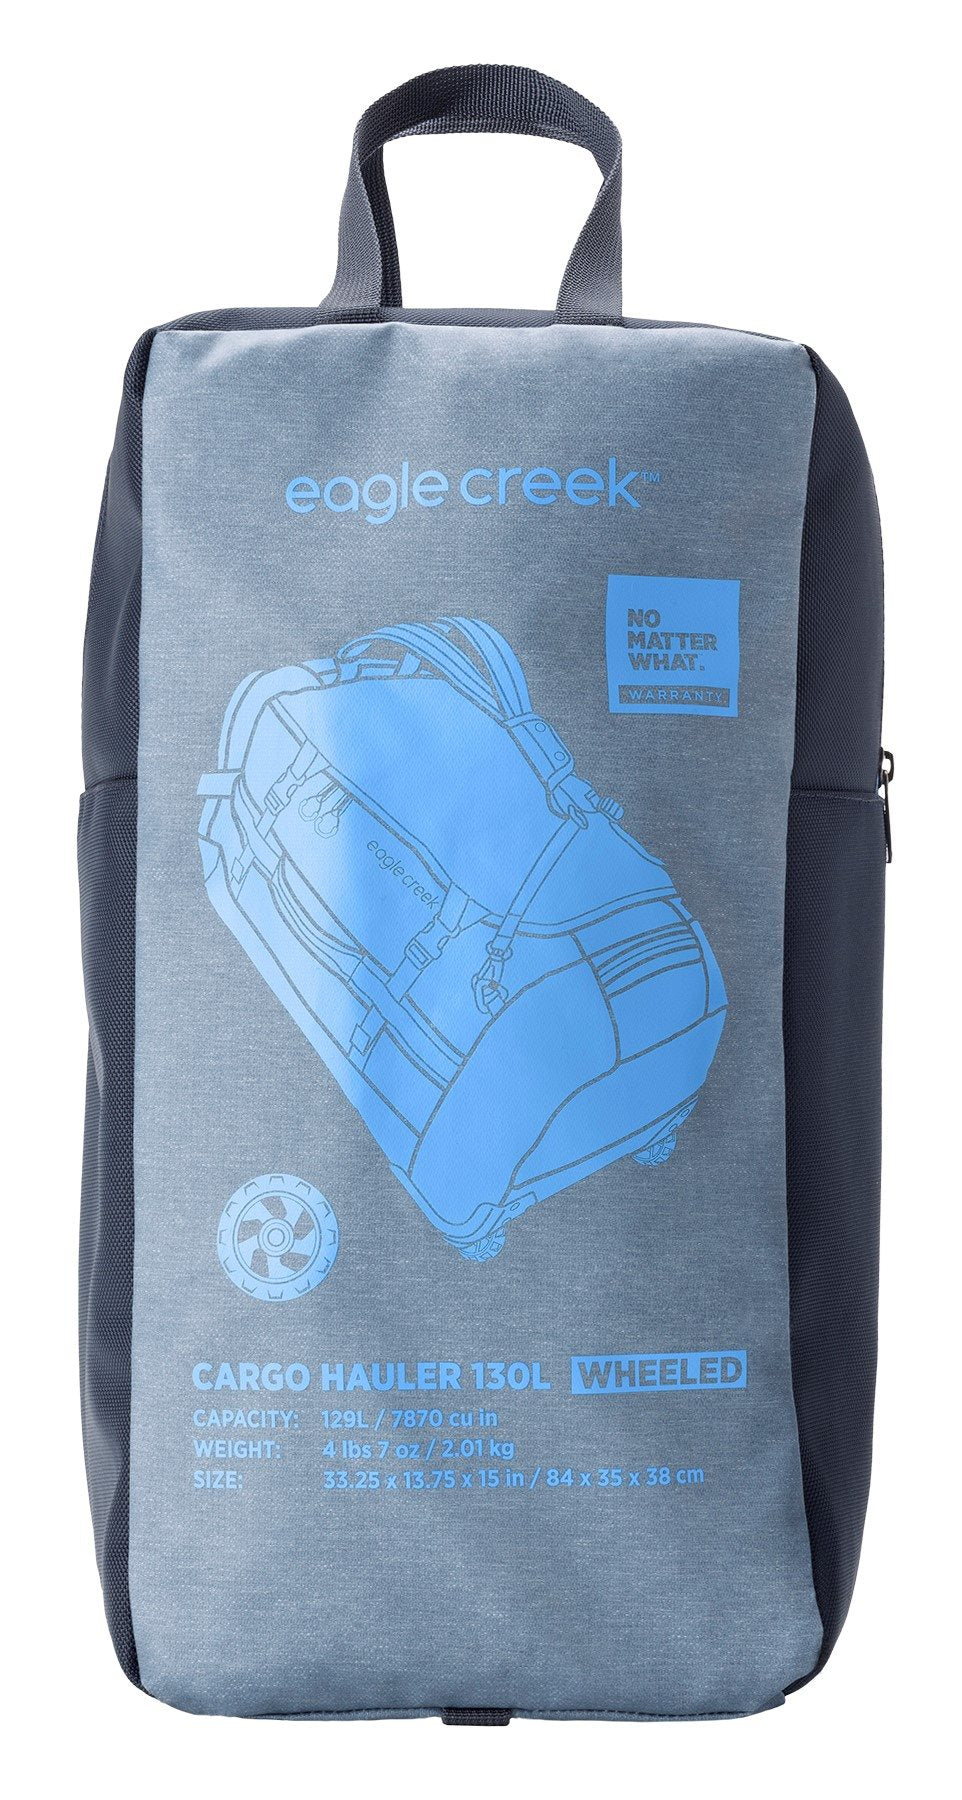 Eagle Creek Cargo Hauler Wheeled Duffel - 130L - Glacier Blue Reistas - Reisartikelen-nl